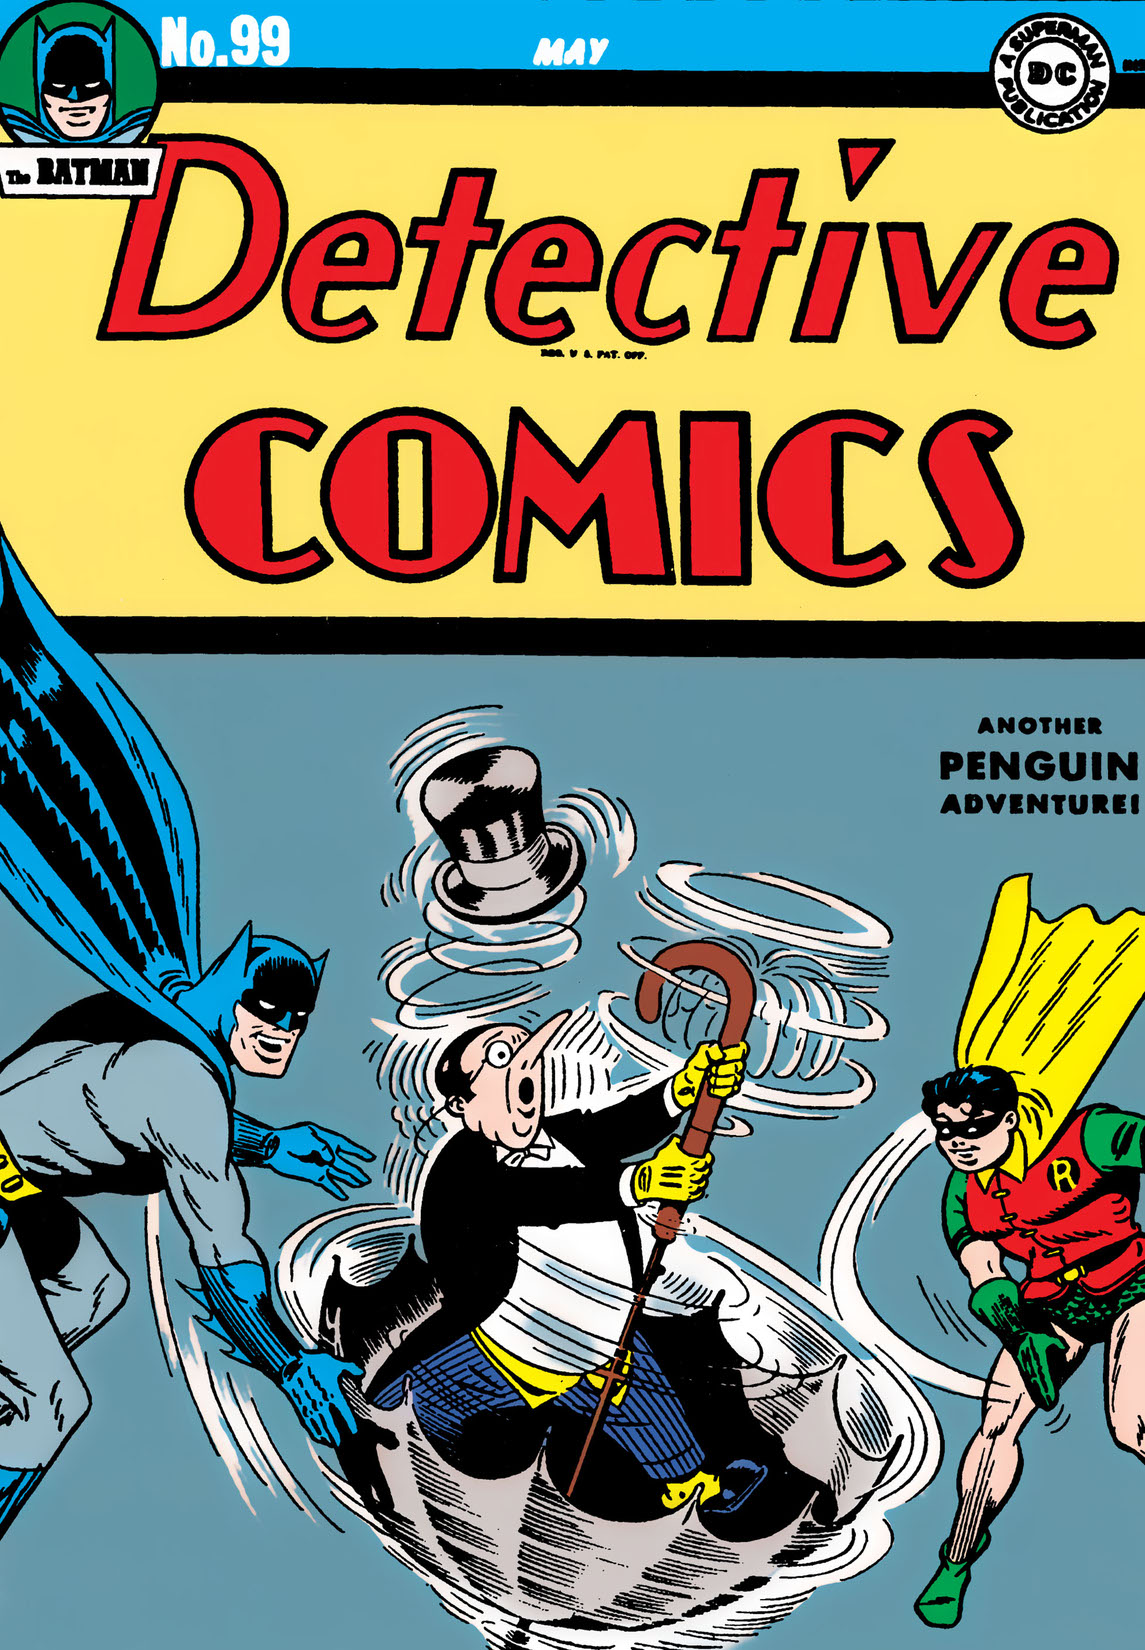 Detective Comics (1937-) #99 preview images